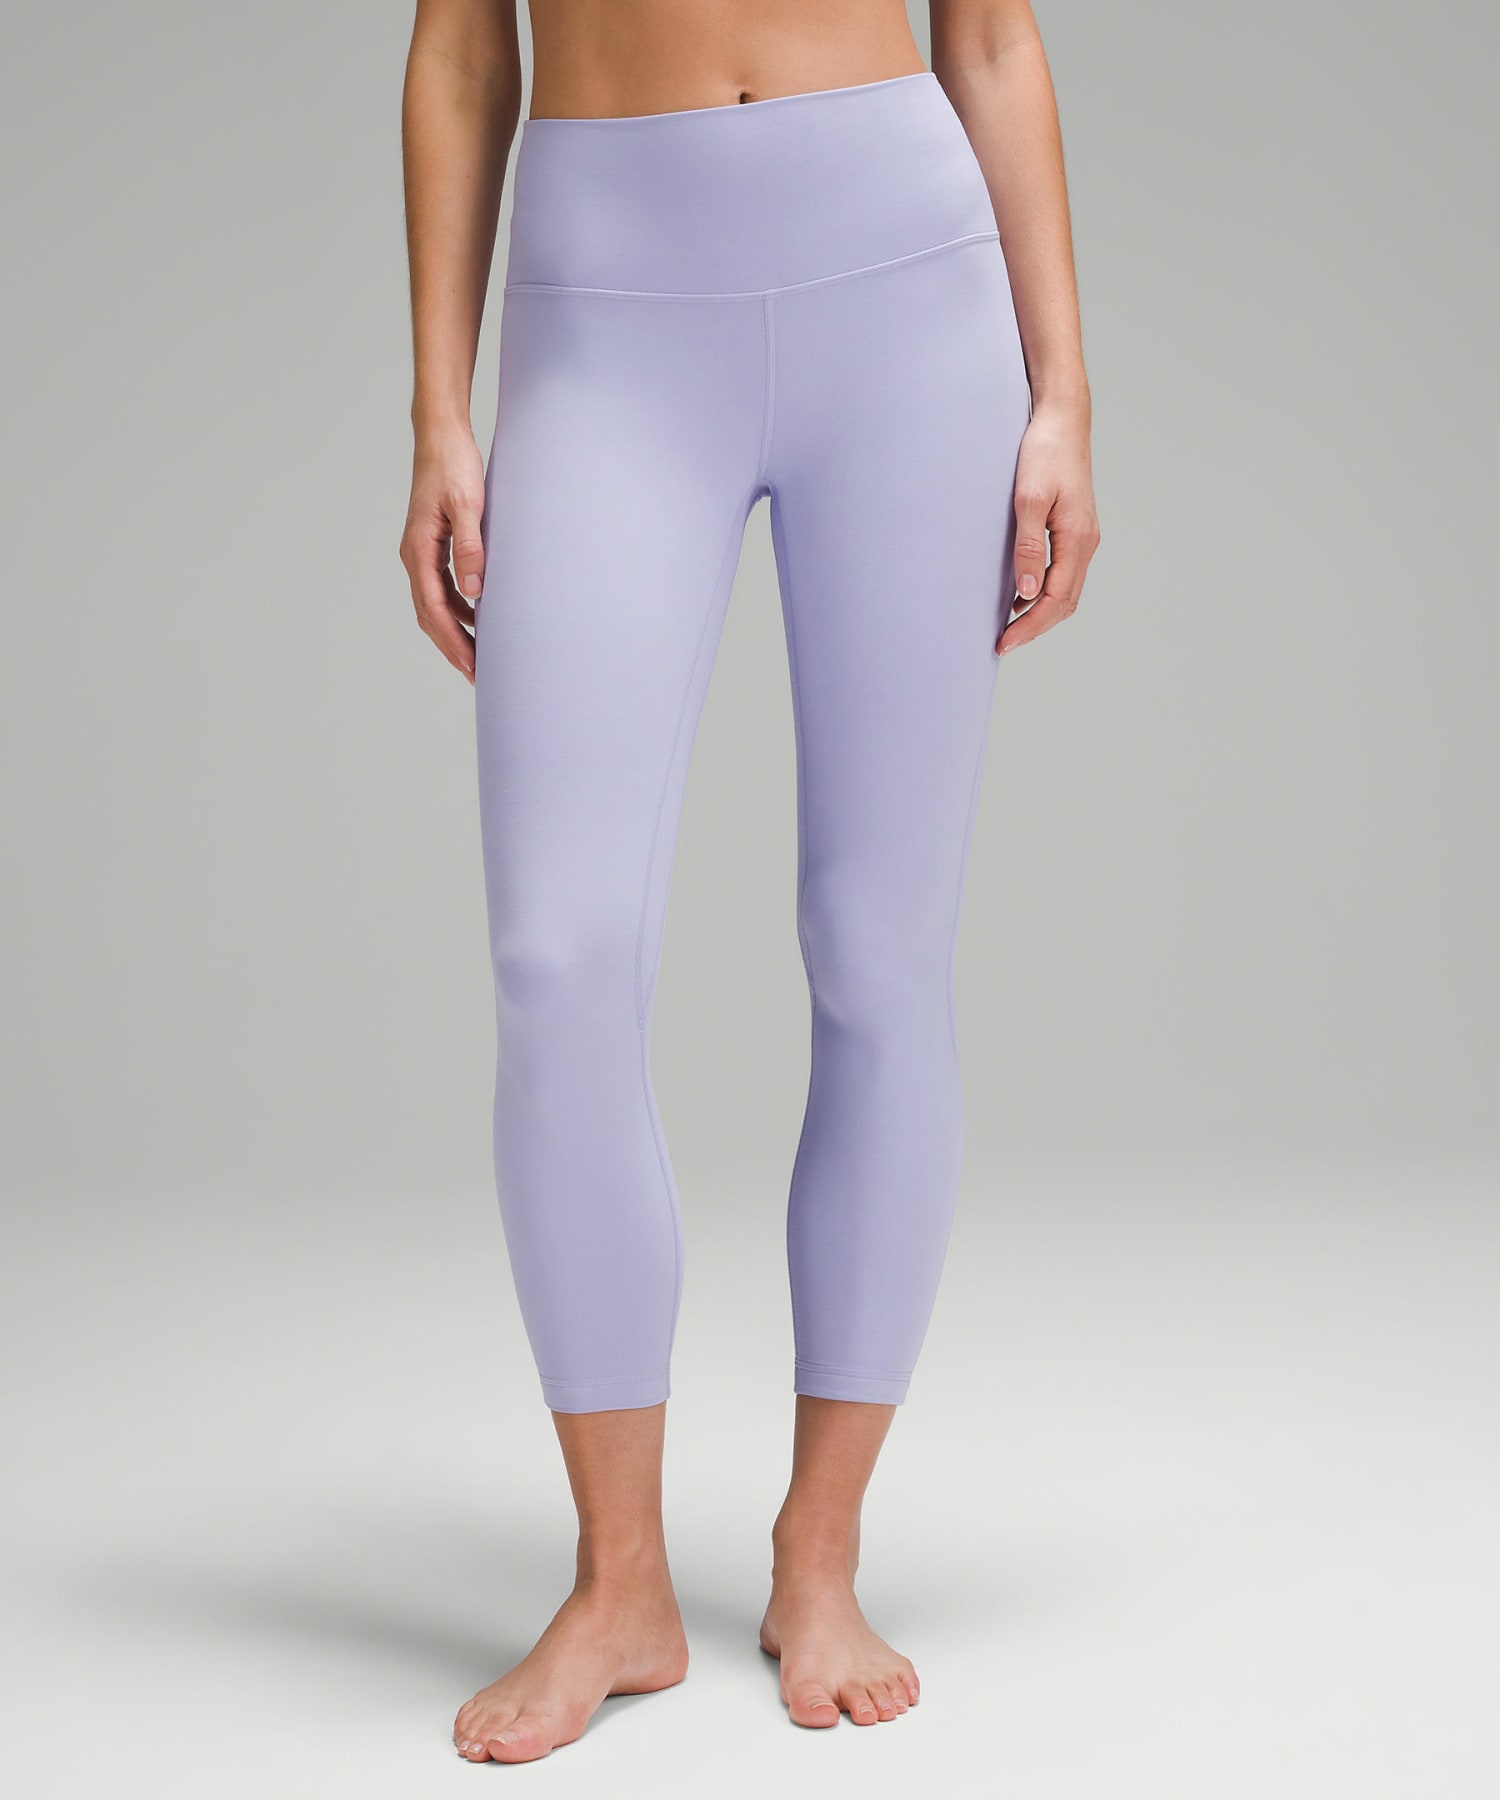 Yogipace Yoga Dress Pants review — TODAY